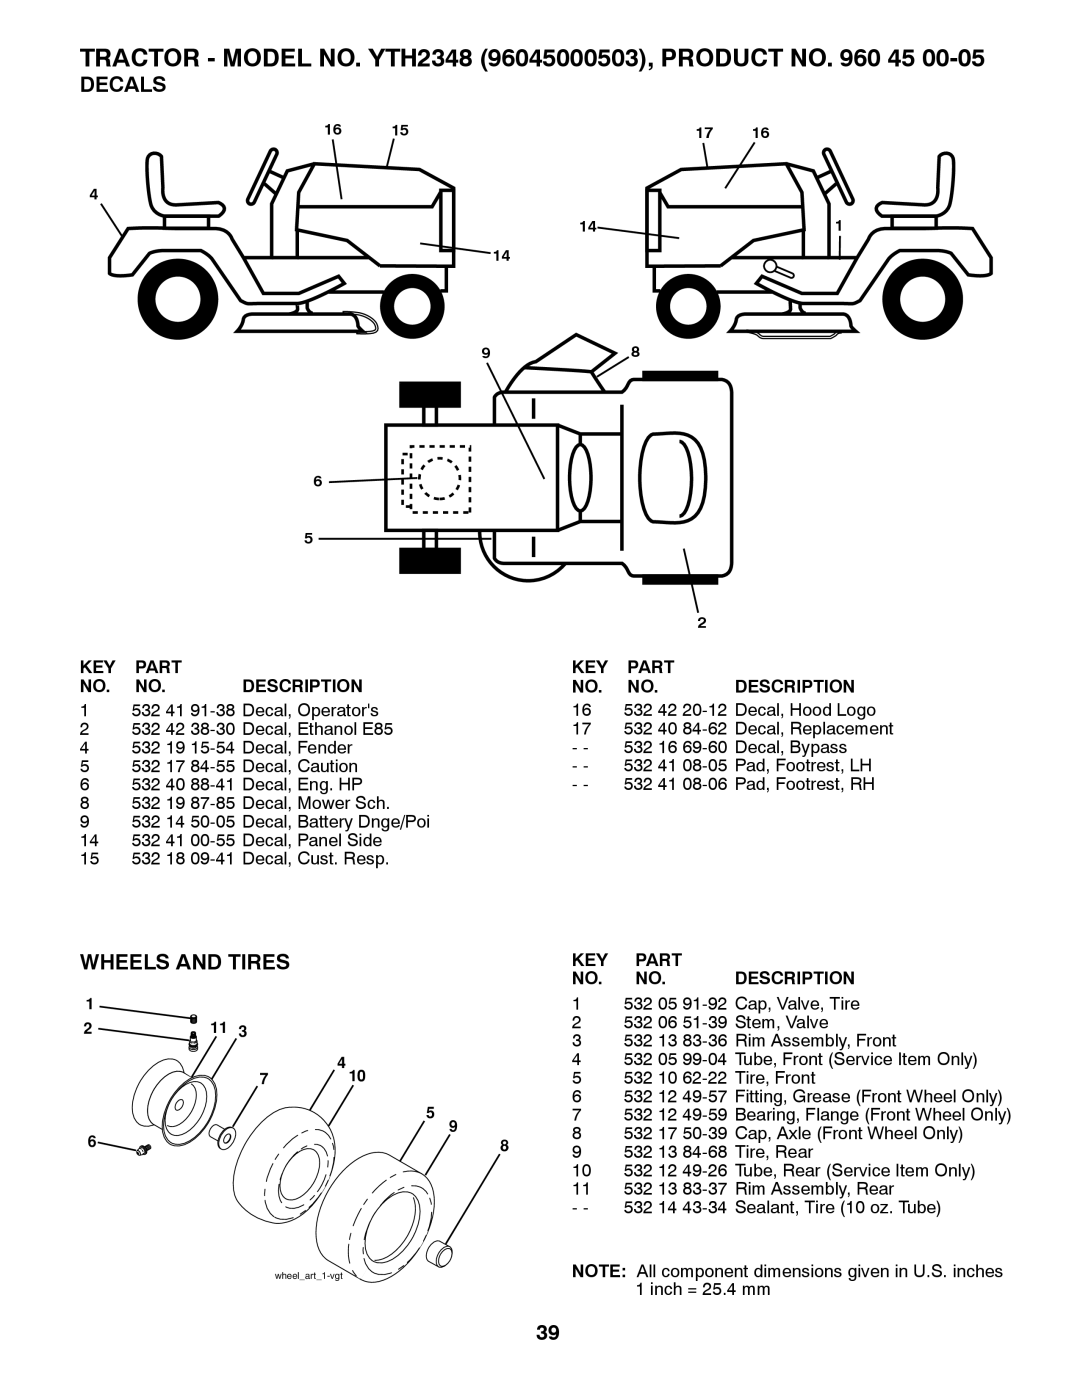 Husqvarna owner manual Decals, Wheels And Tires, TRACTOR - MODEL NO. YTH2348 96045000503, PRODUCT NO, Part, Description 